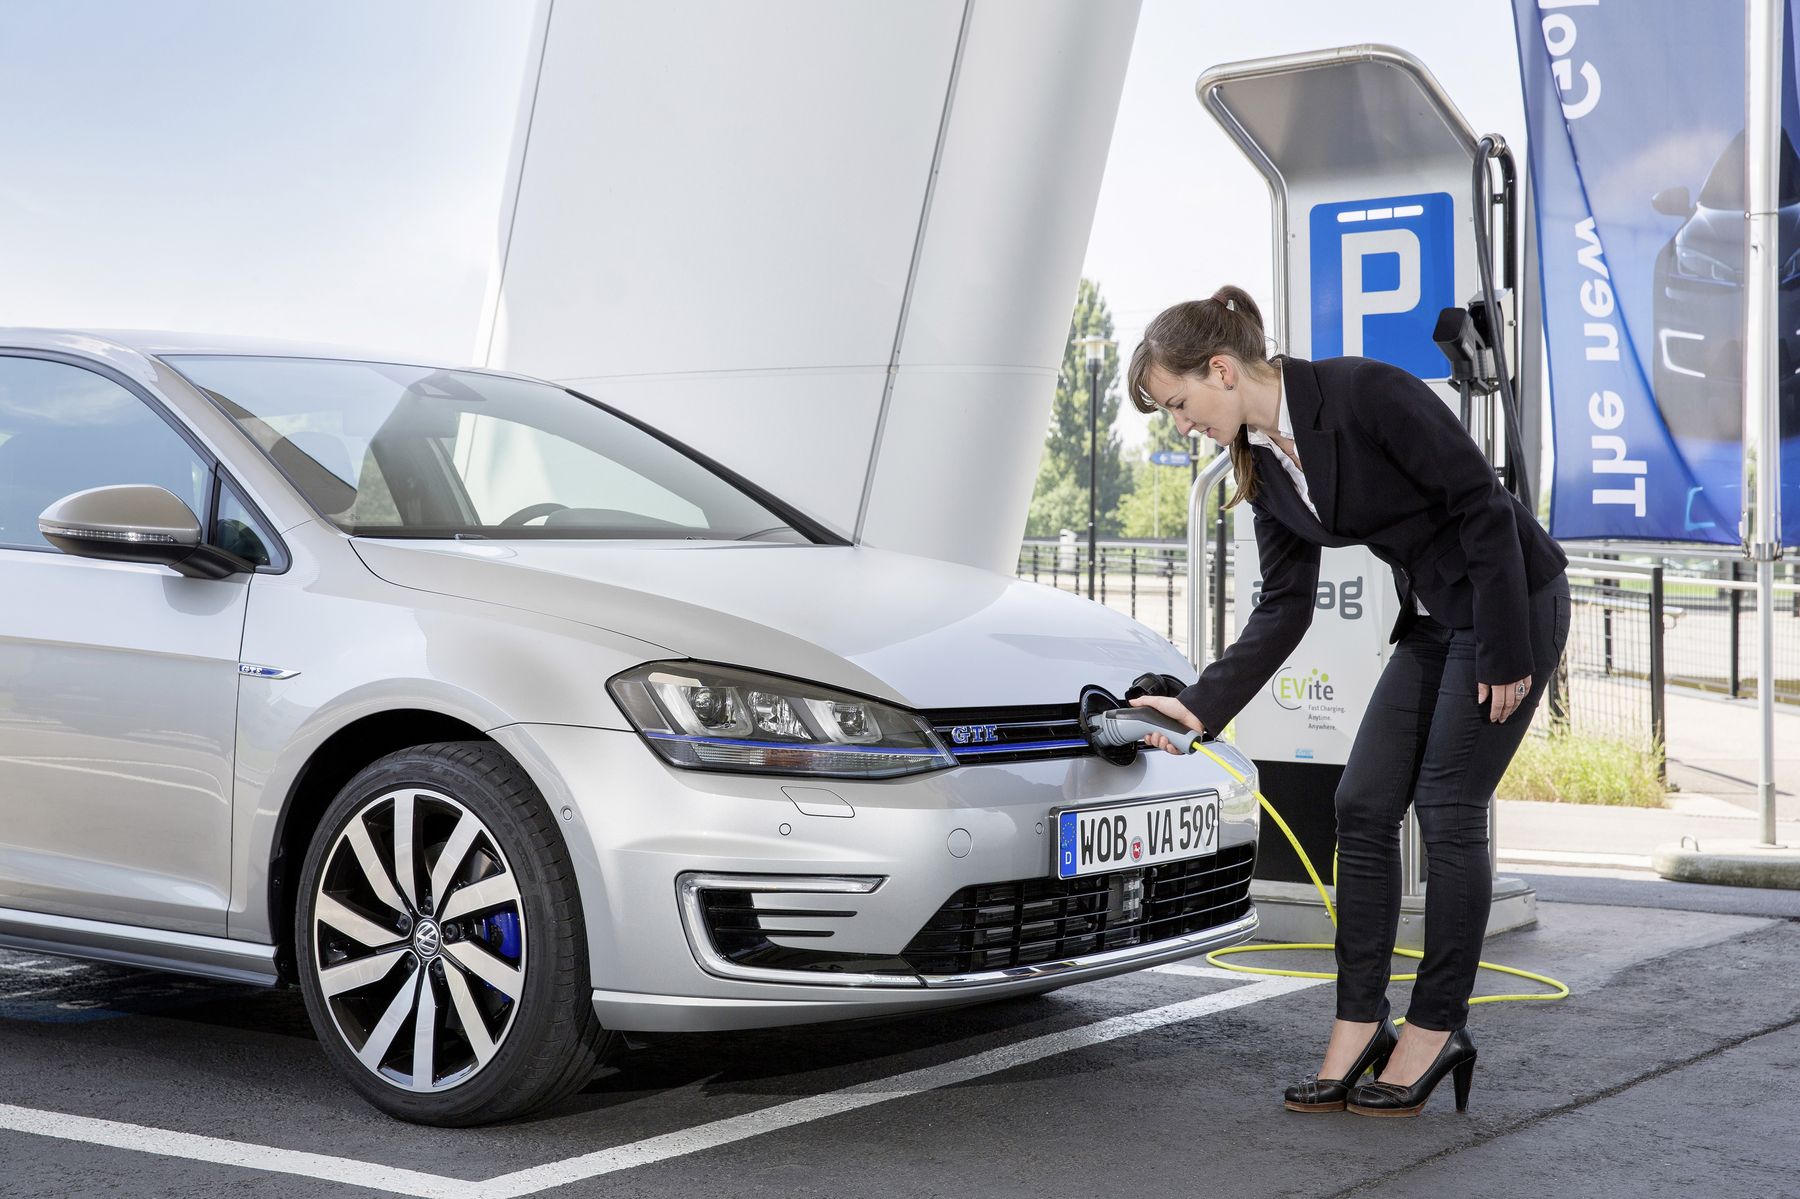 Volkswagen charging station